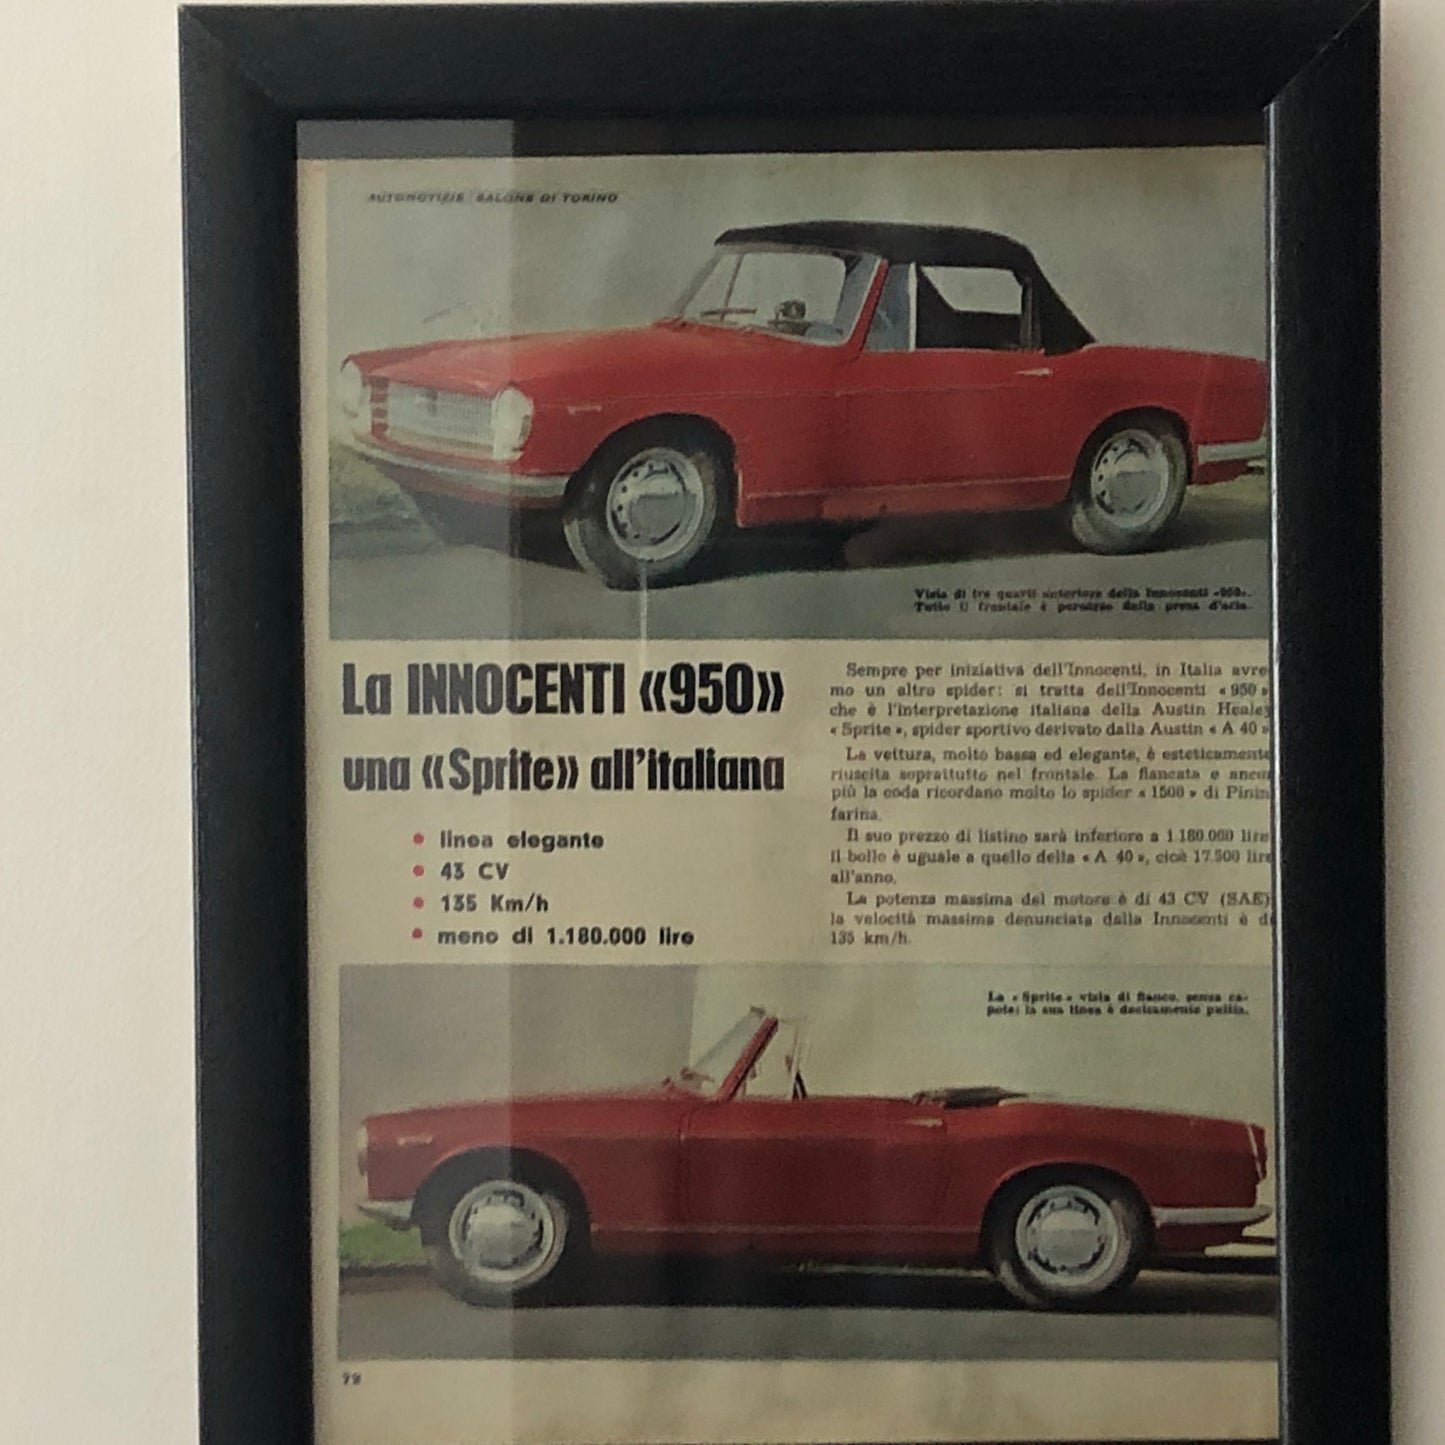 Innocenti, Presentation Innocenti 950 Year 1960 with Caption in Italian